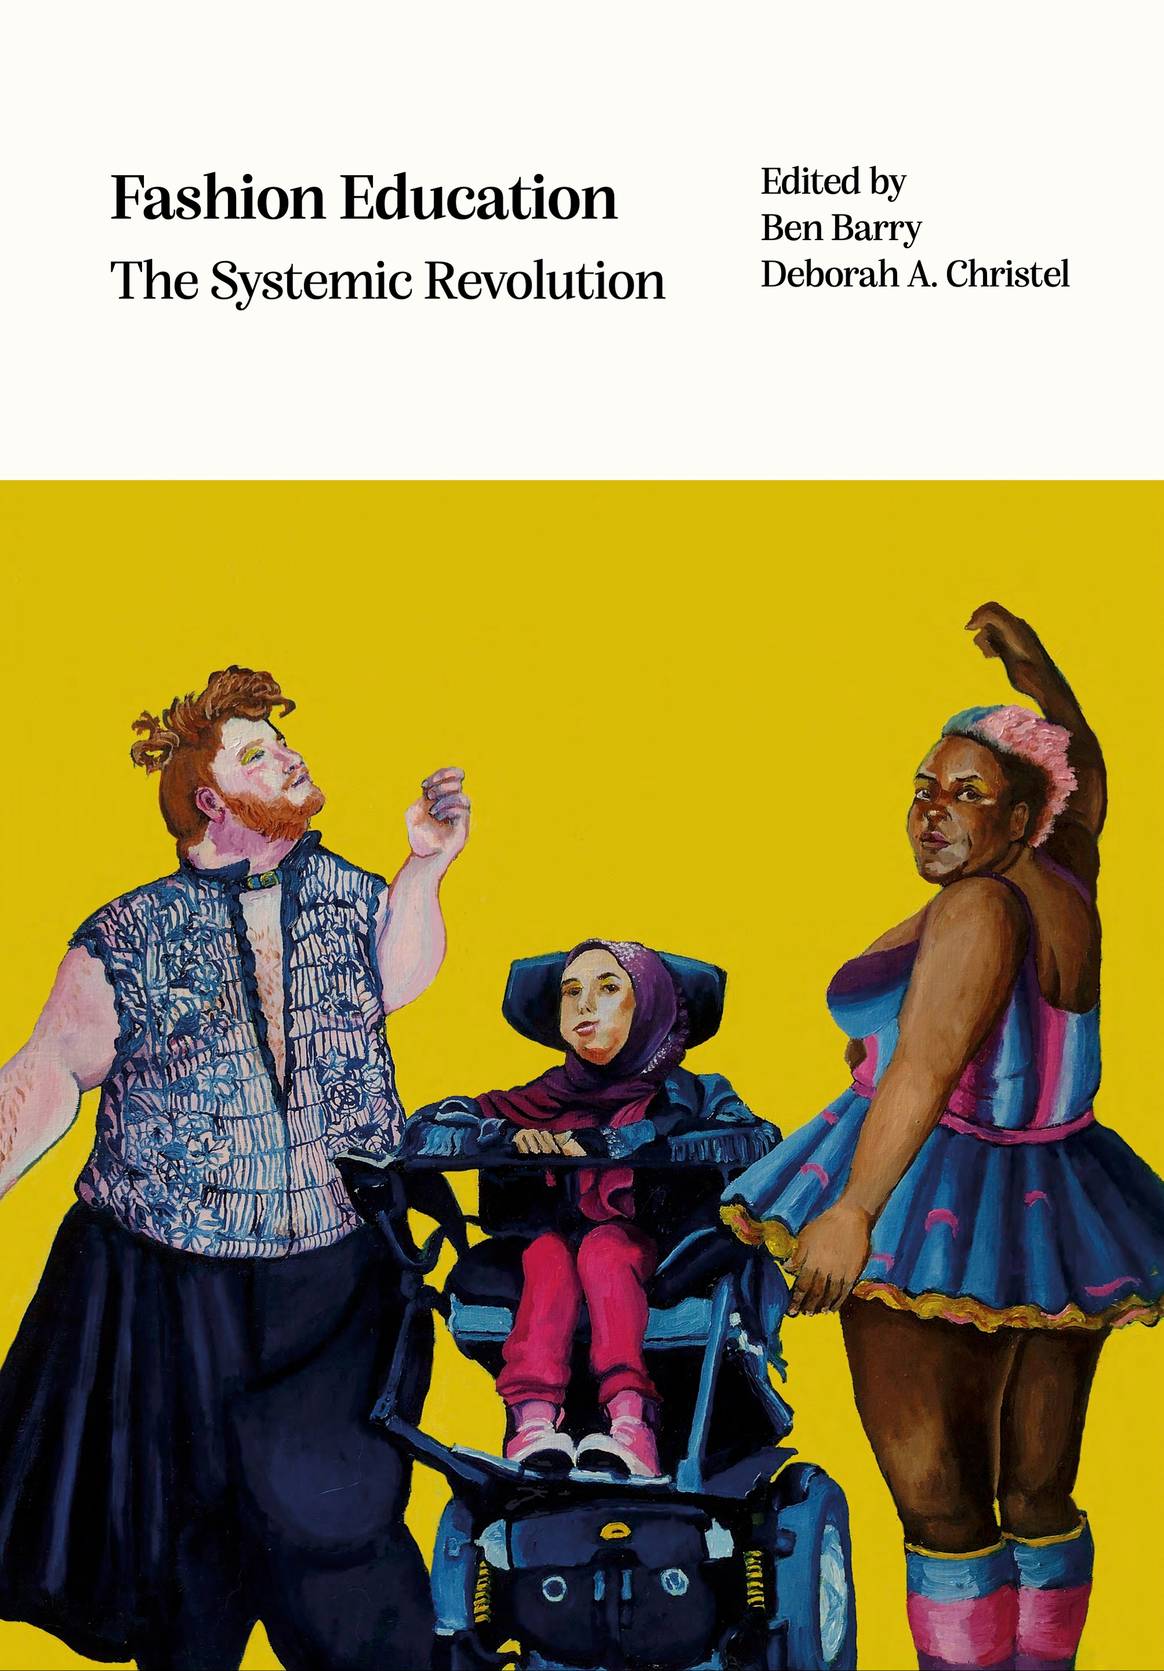 Fashion Education, The Systemic Revolution